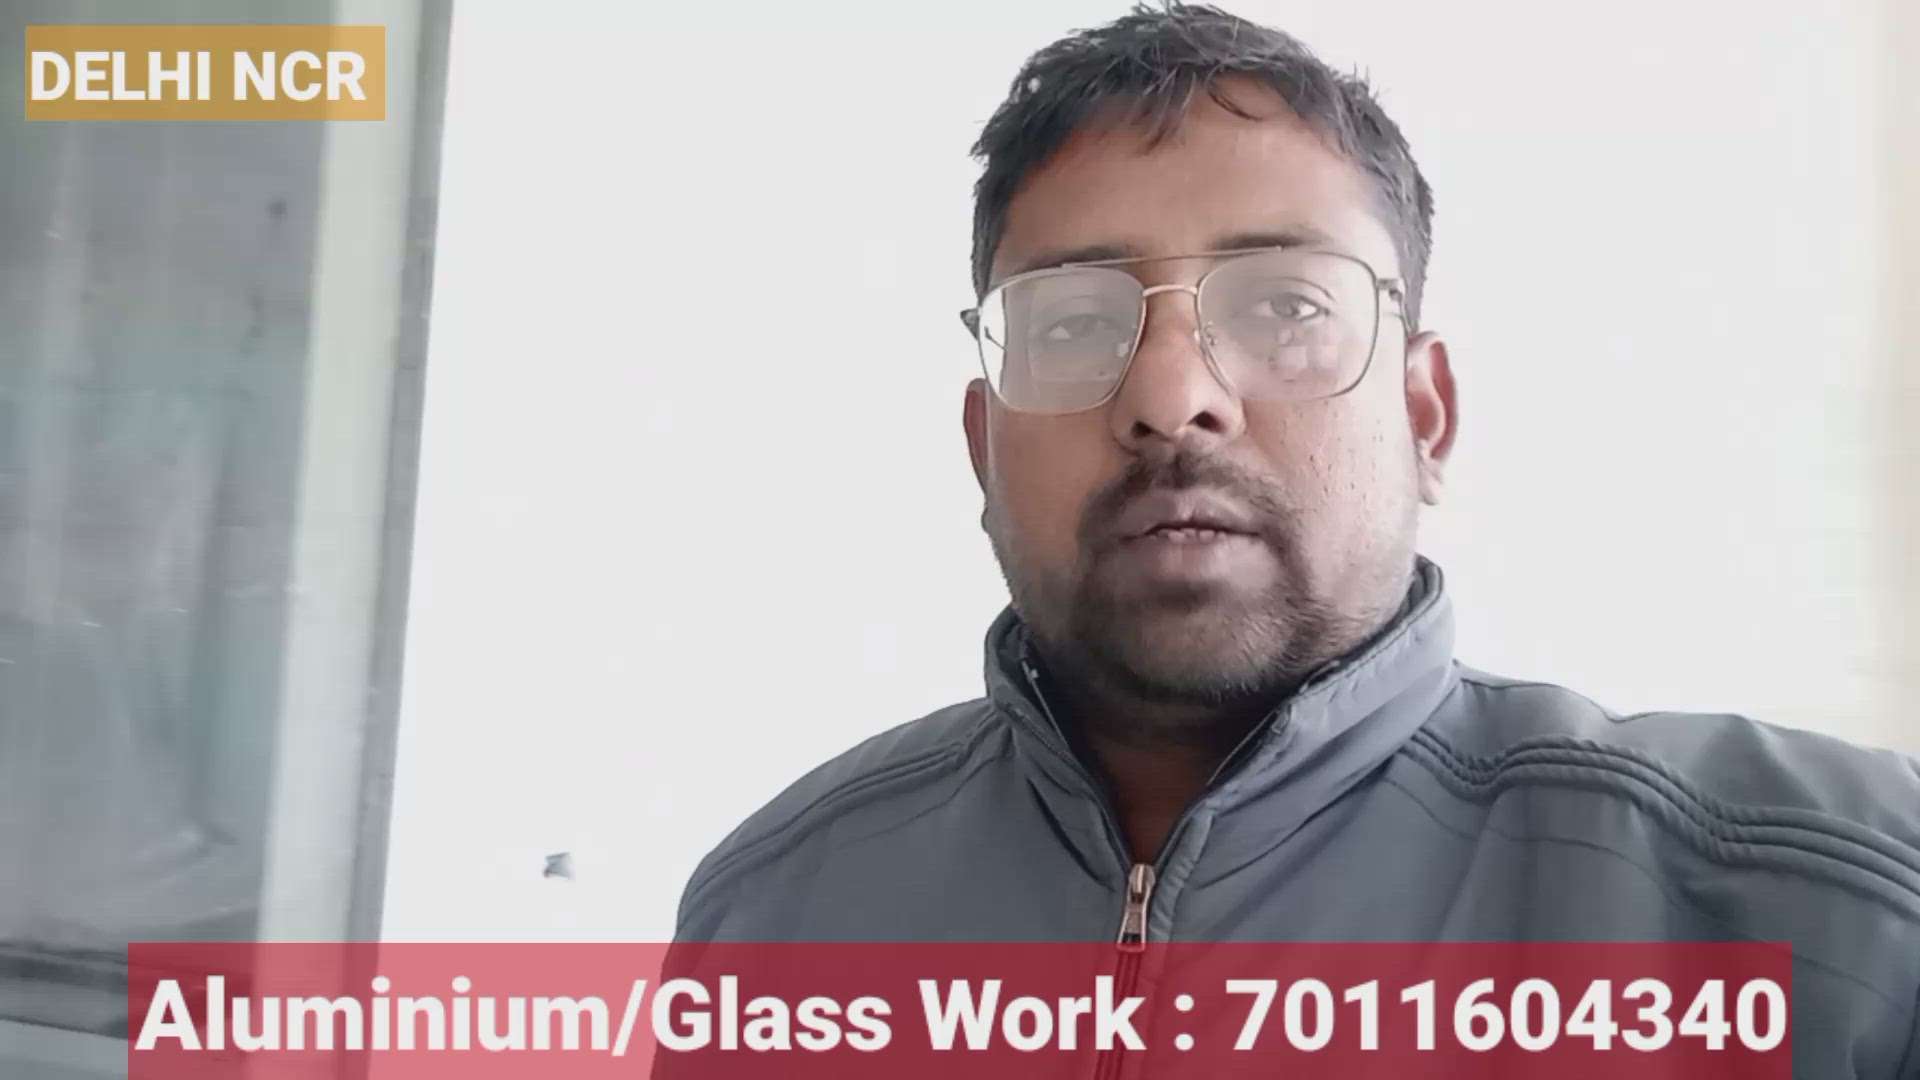 #aluminium Profile #Shower partition #glass Work all #DelhiNCR service available: 7011604340